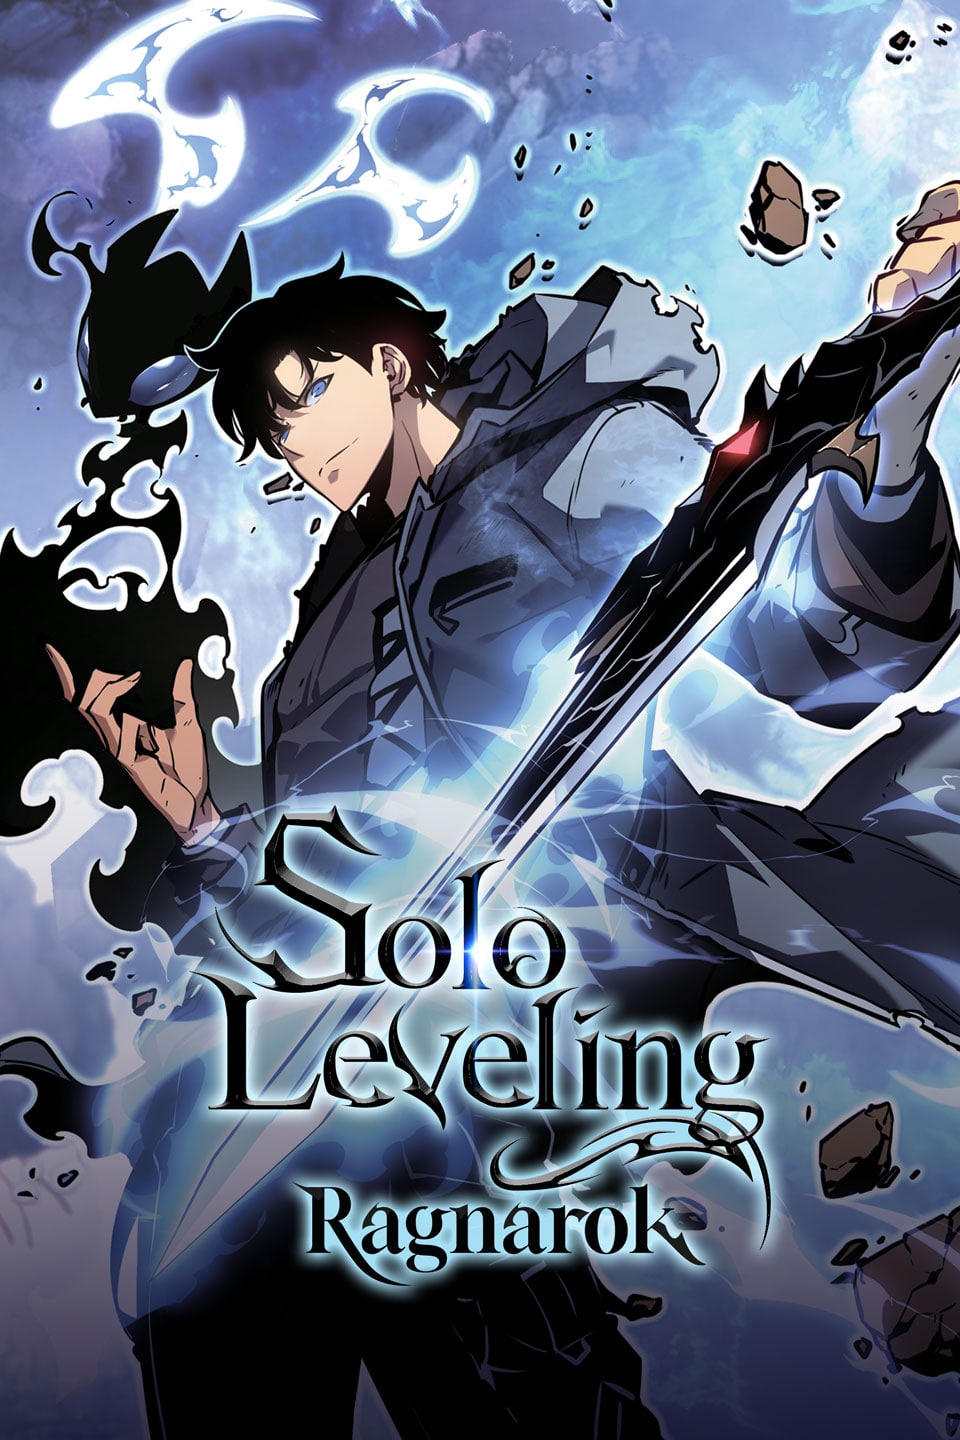 Jual Solo Leveling Vol. 4 (Light Novel)